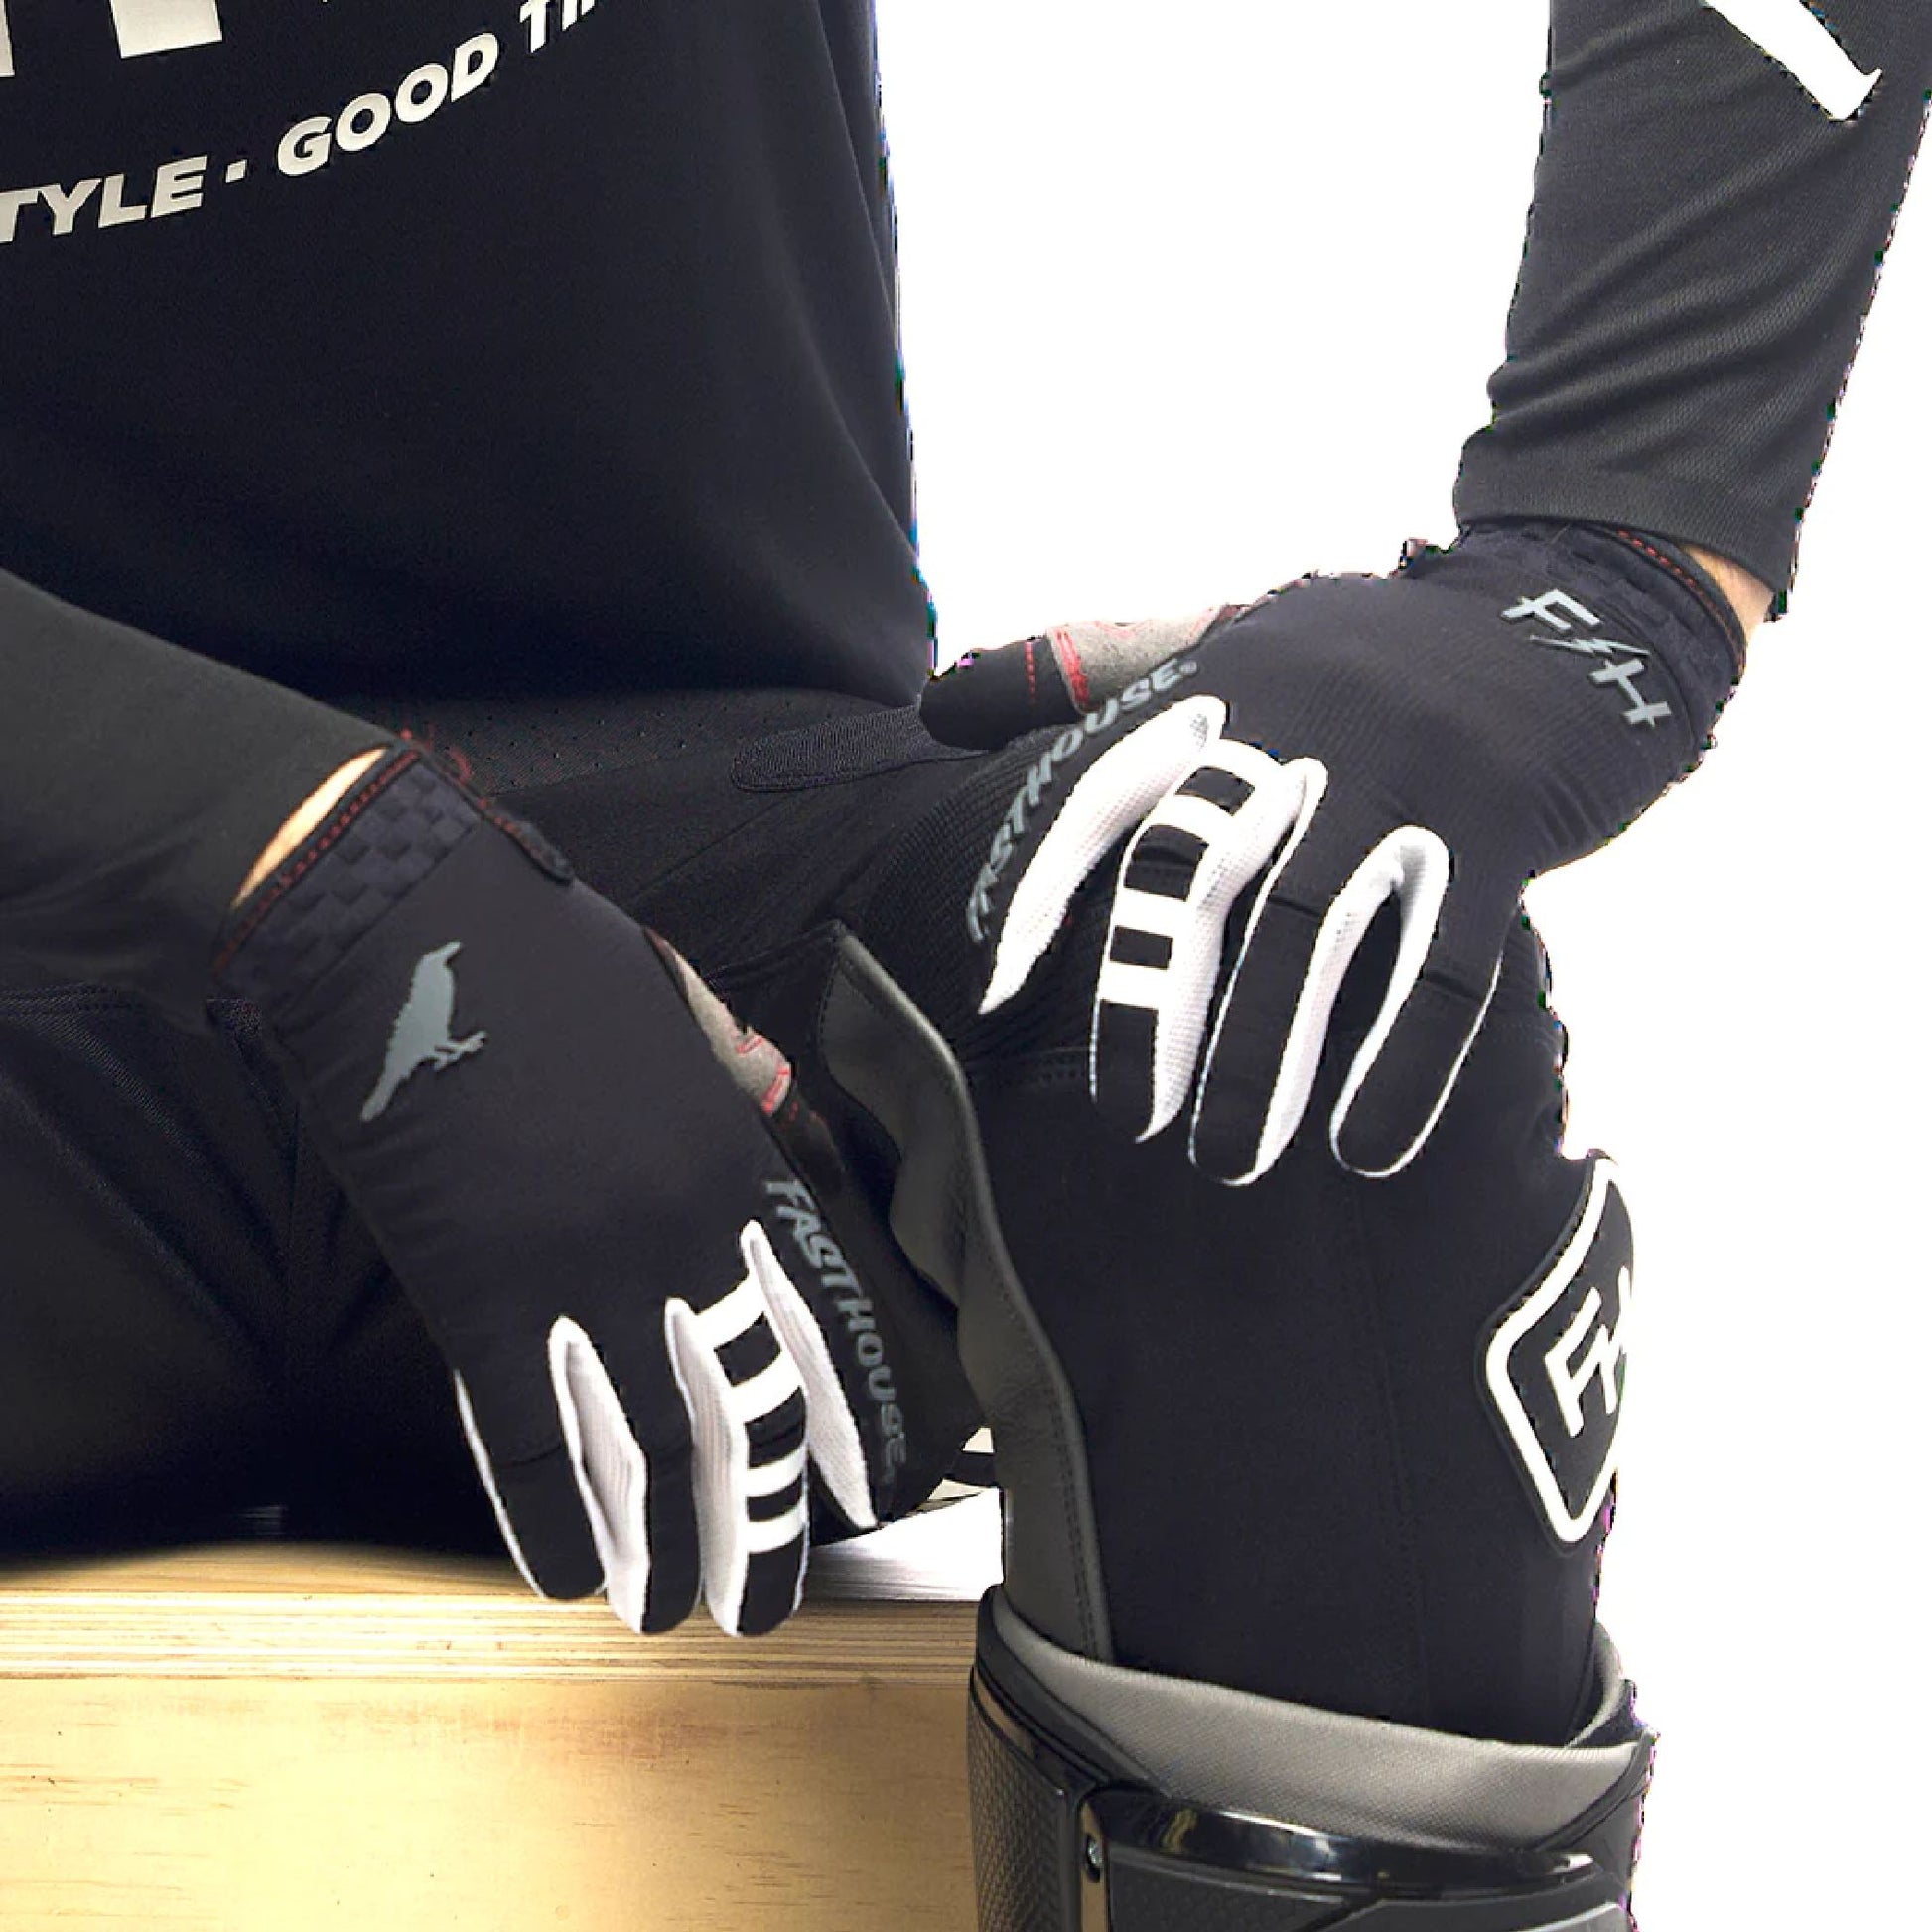 Fasthouse Elrod Air Glove Black Bike Gloves